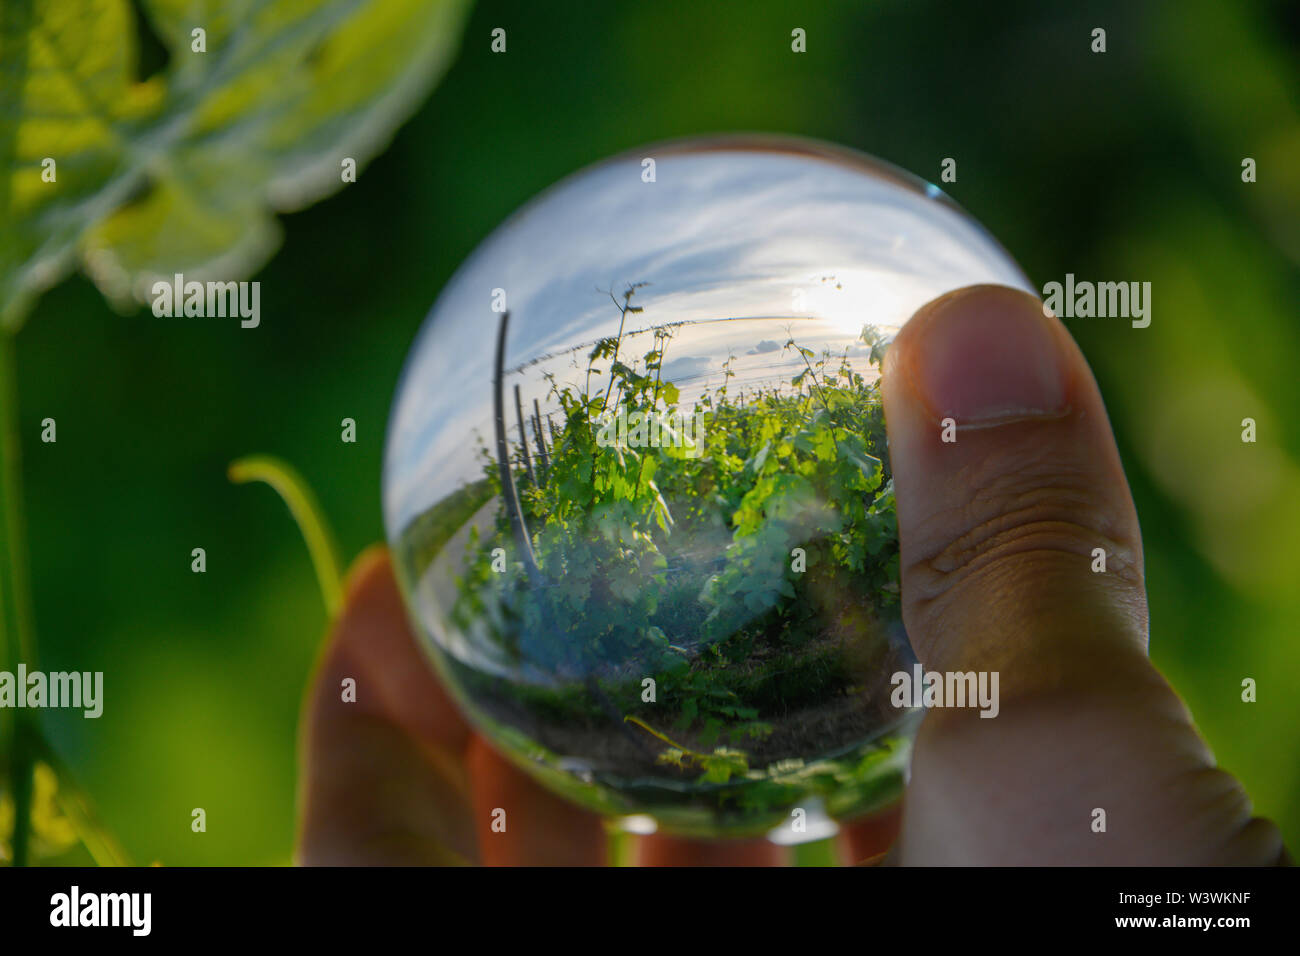 Vineyards captured in glass ball Stock Photo